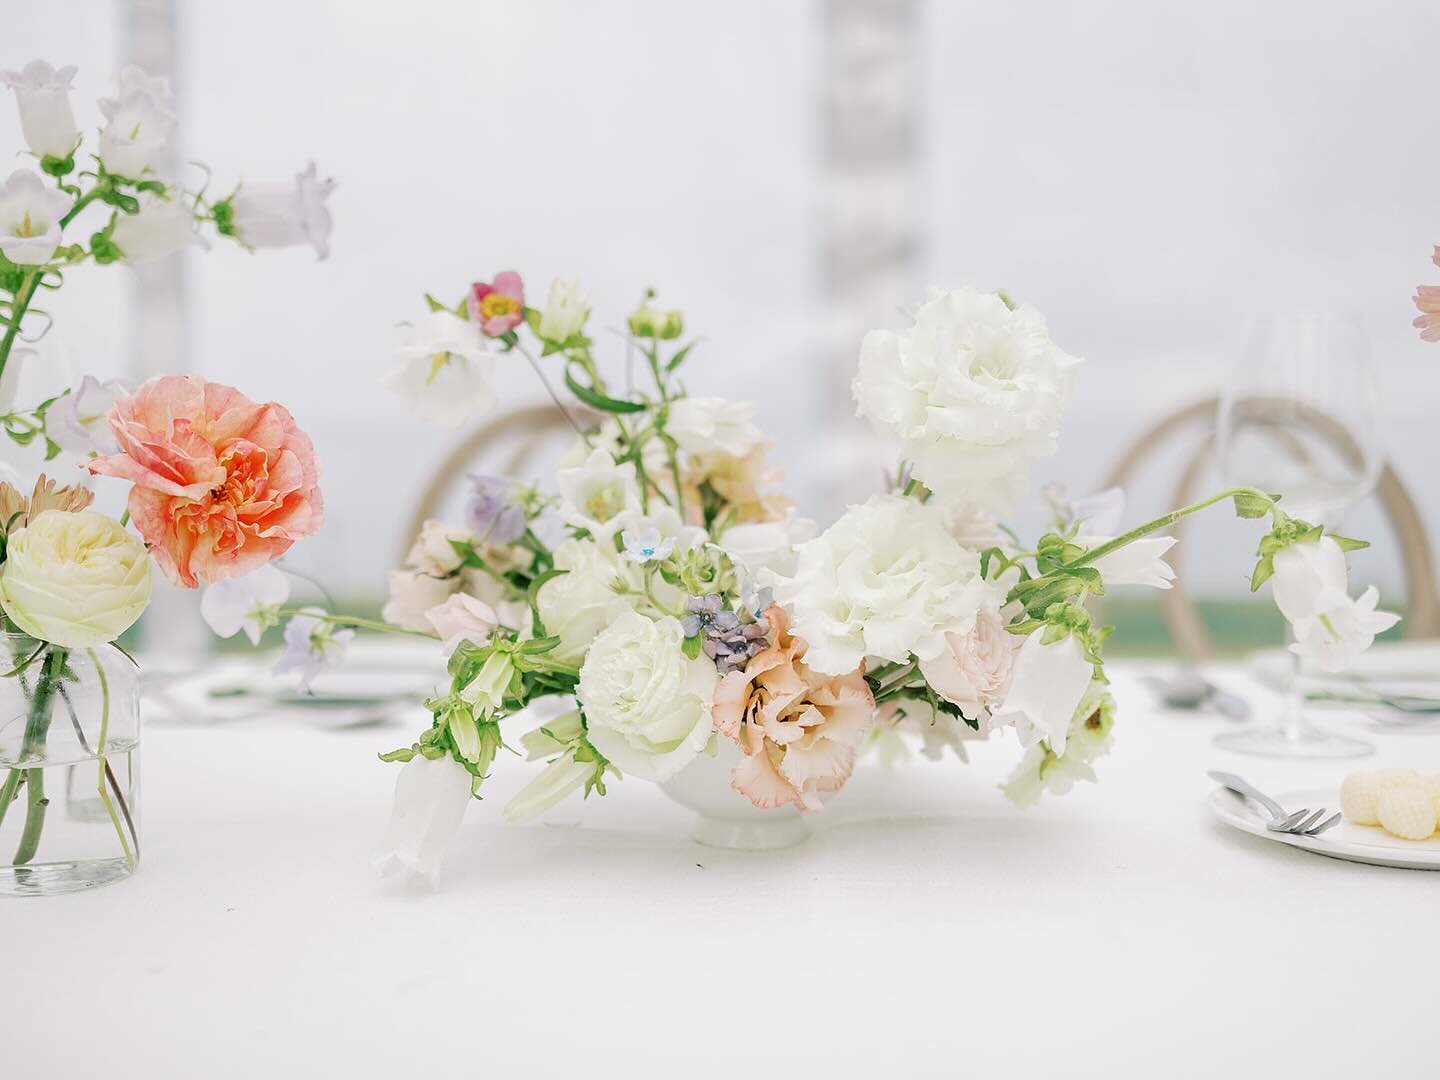 Flowers make every table design complete 😌
.
.
.
#niagaraflorist #torontoflorist #adelaideflorist #adelaidewedding #adelaideweddingflorist#flowermagic #fineartflowers #floralart #weddingflowers #weddings2024 #torontoweddingflorist #brides2024 #weddi